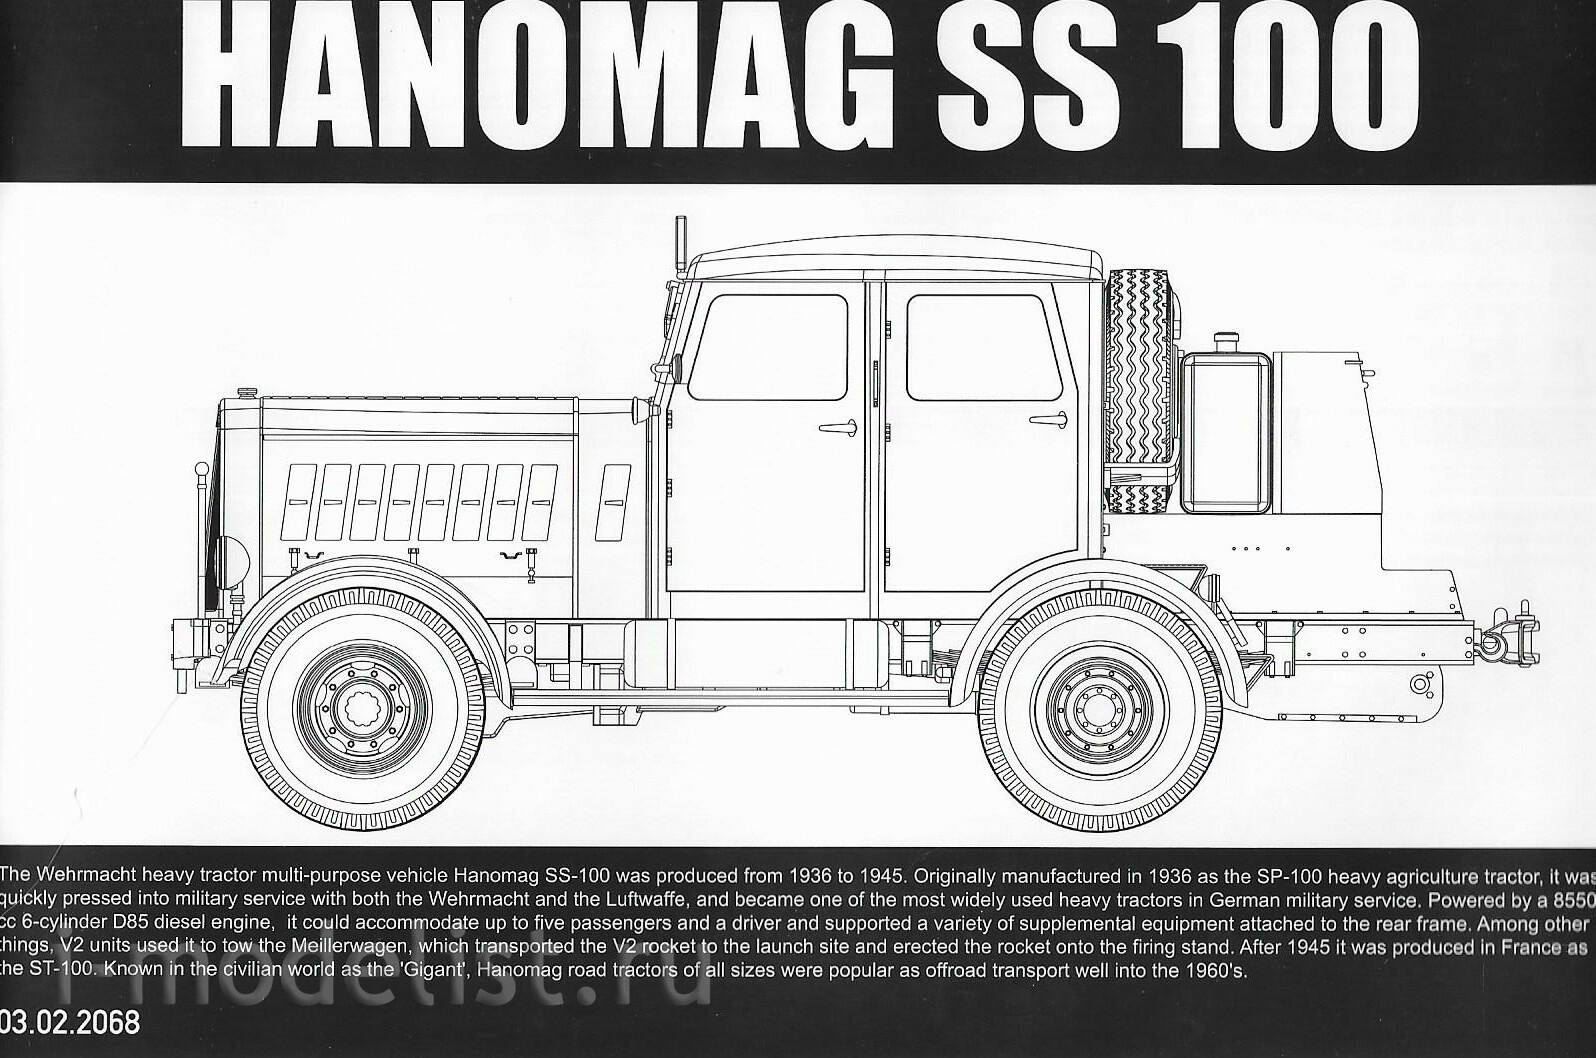 2068 Takom 1/35 WWII German Tractor Hanomag